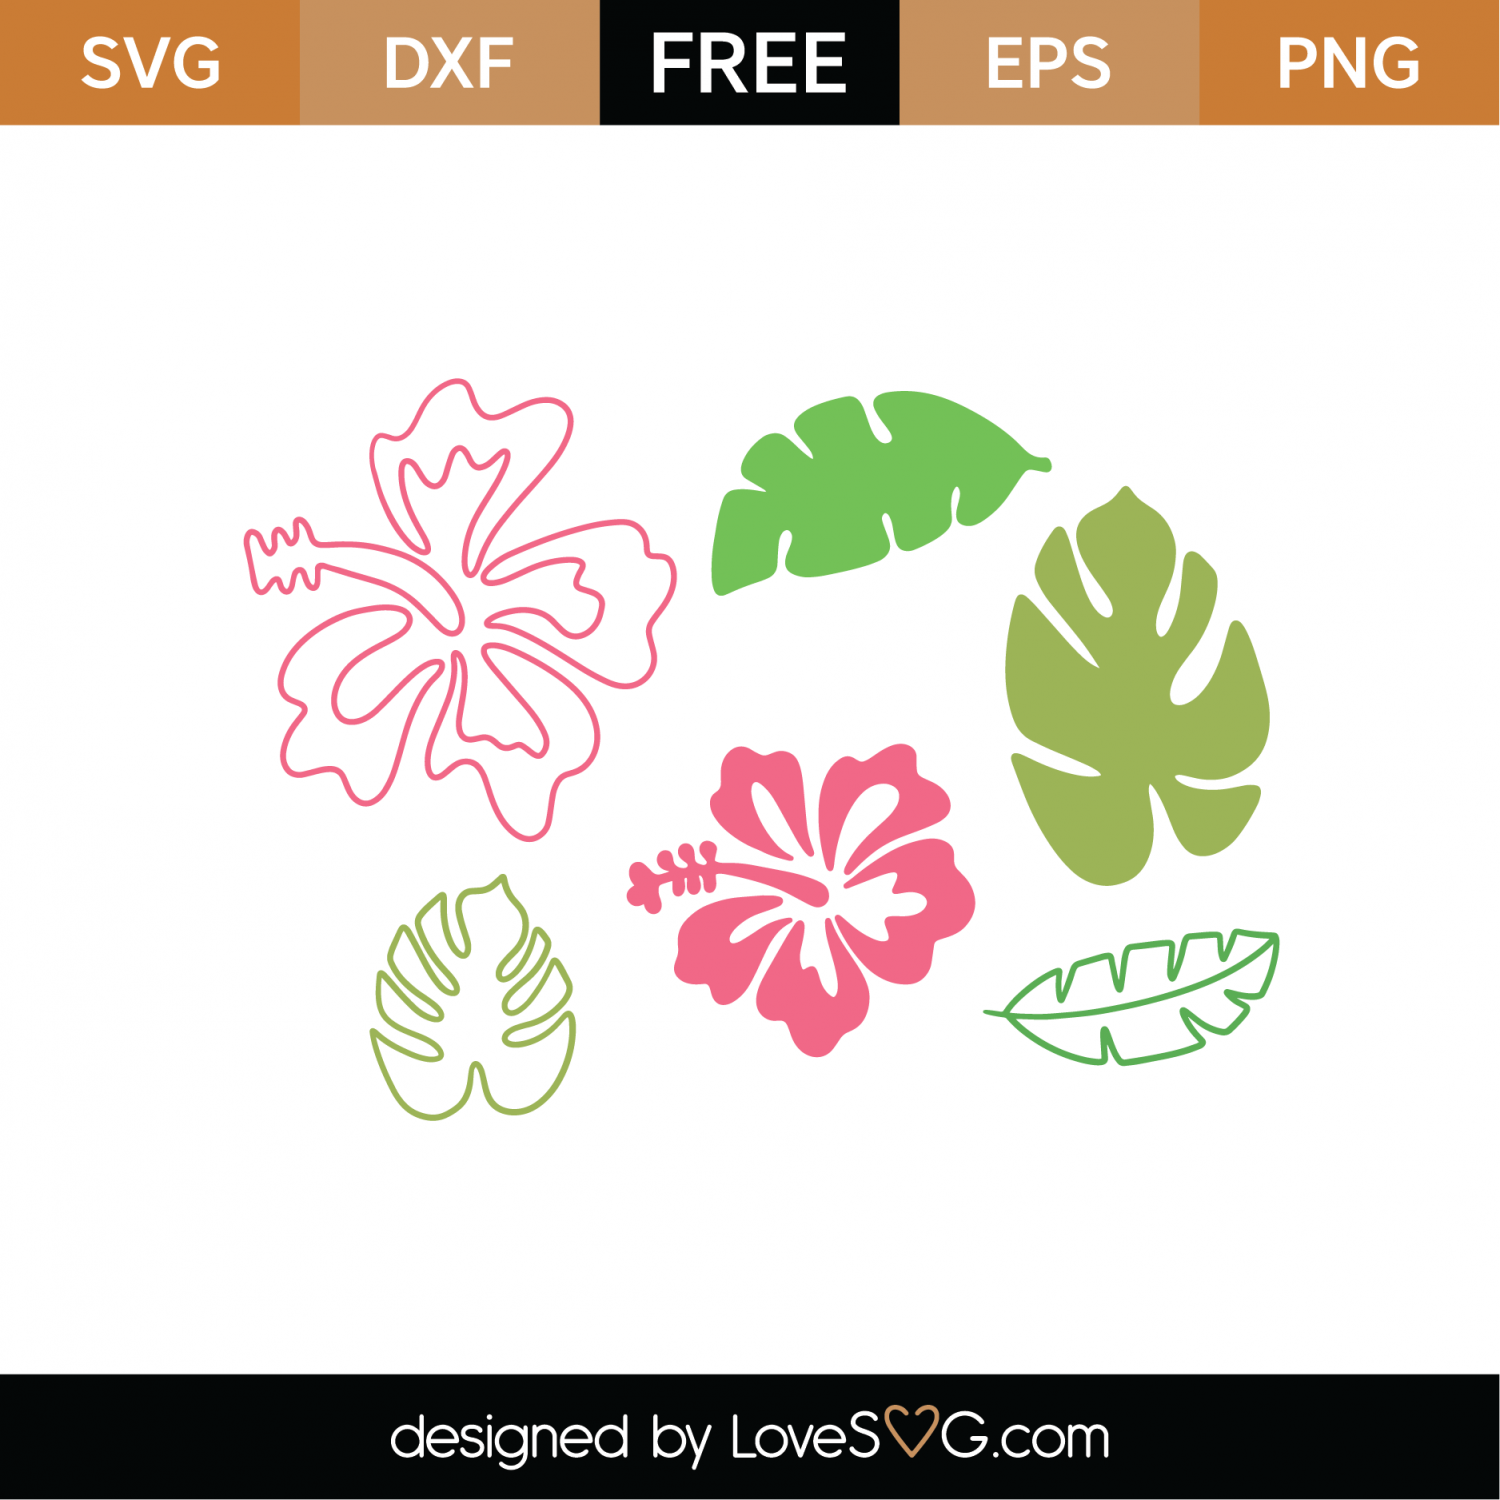 Download Free Tropical Flowers SVG Cut File | Lovesvg.com